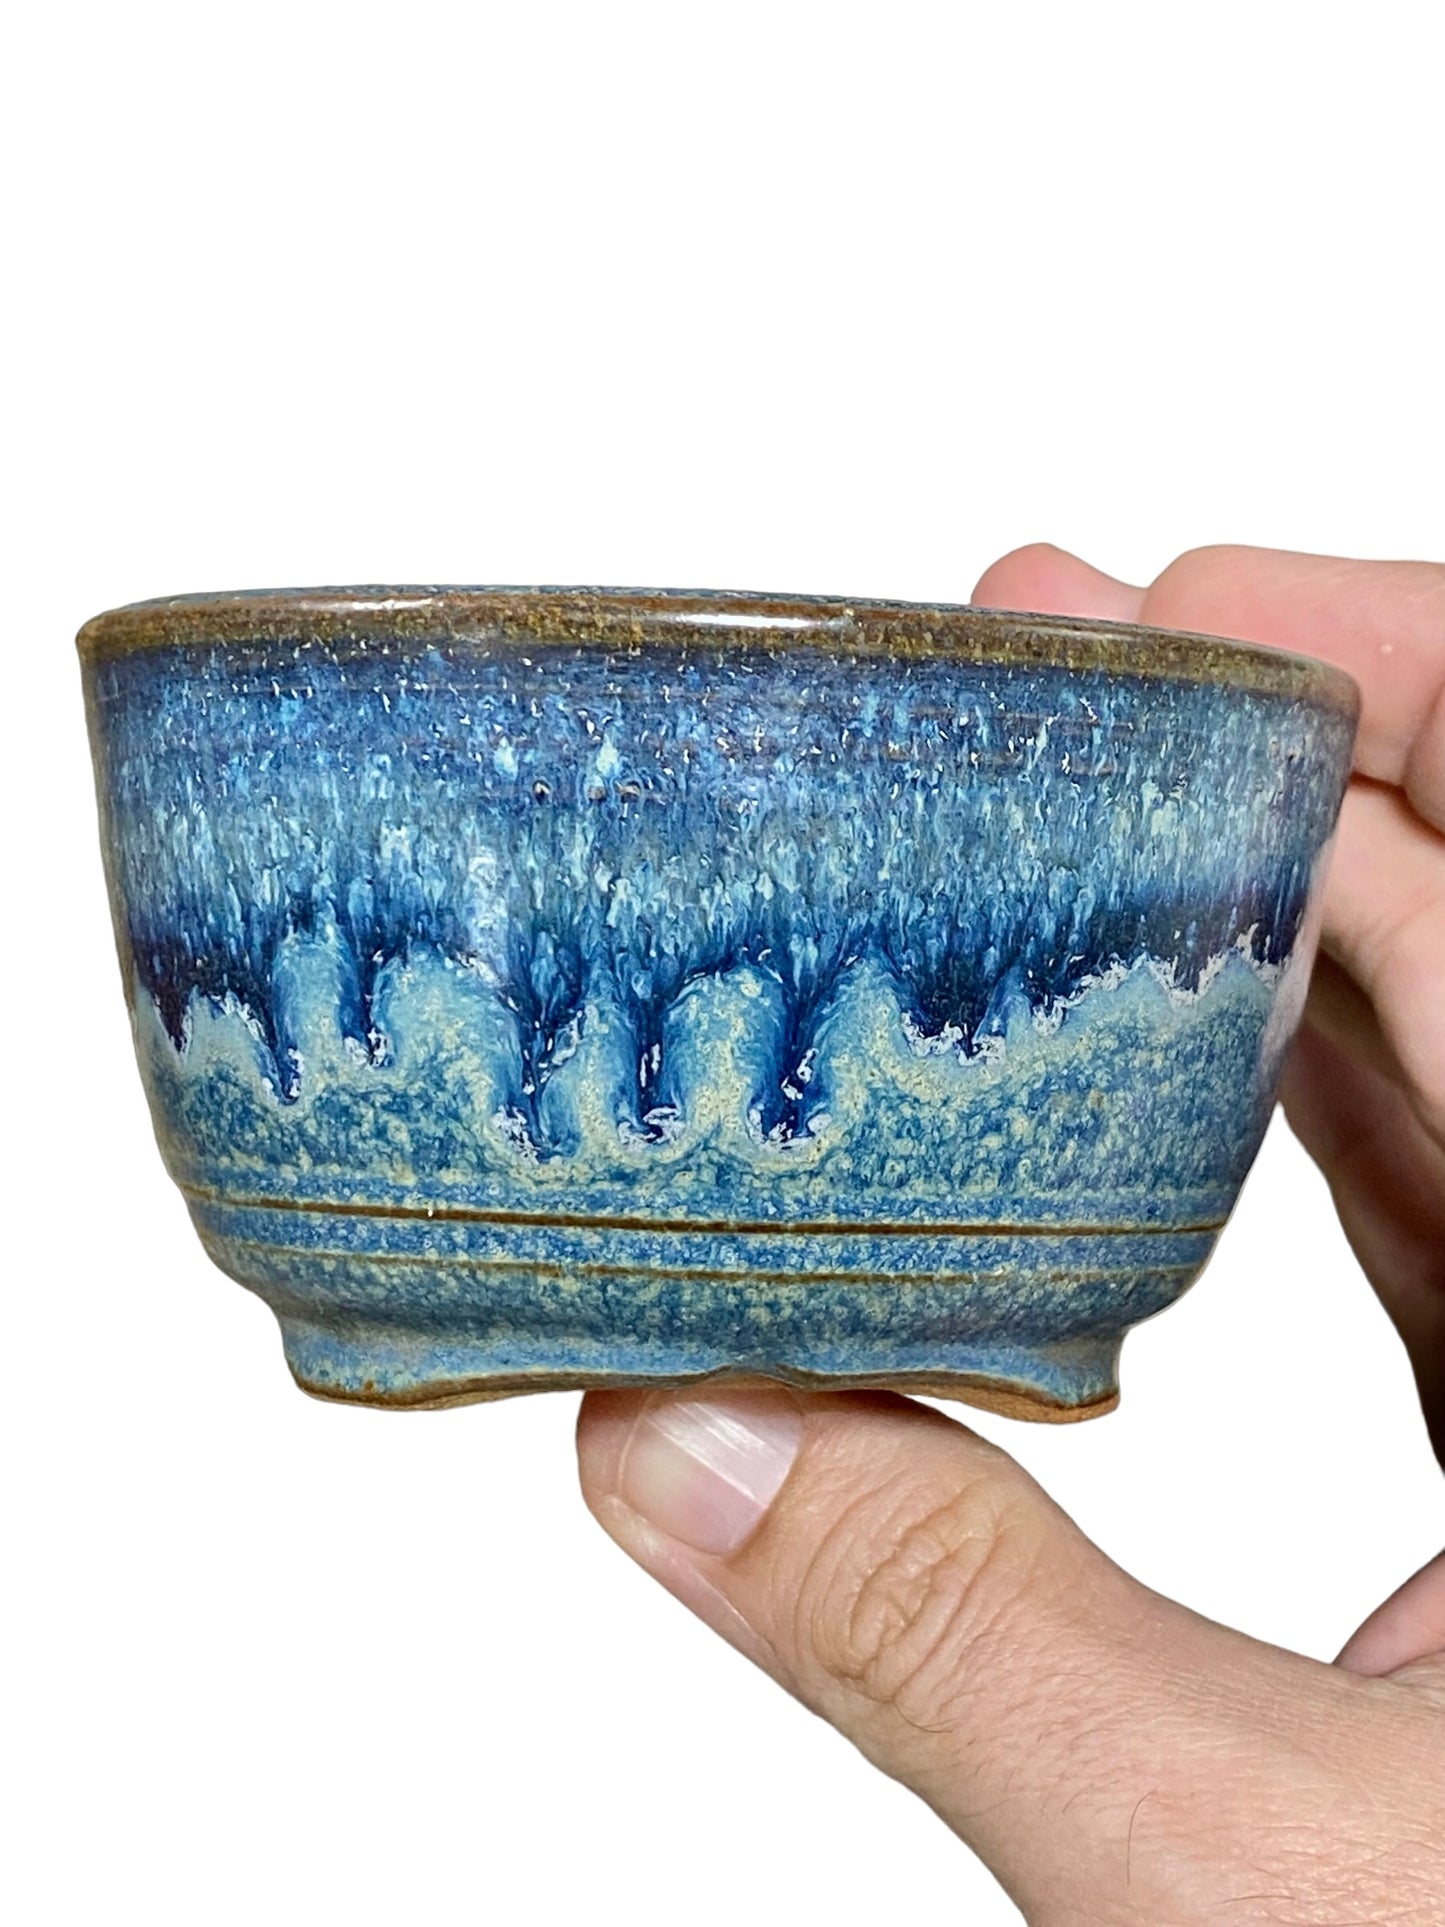 Isso - Stellar Glazed Bowl Bonsai Pot